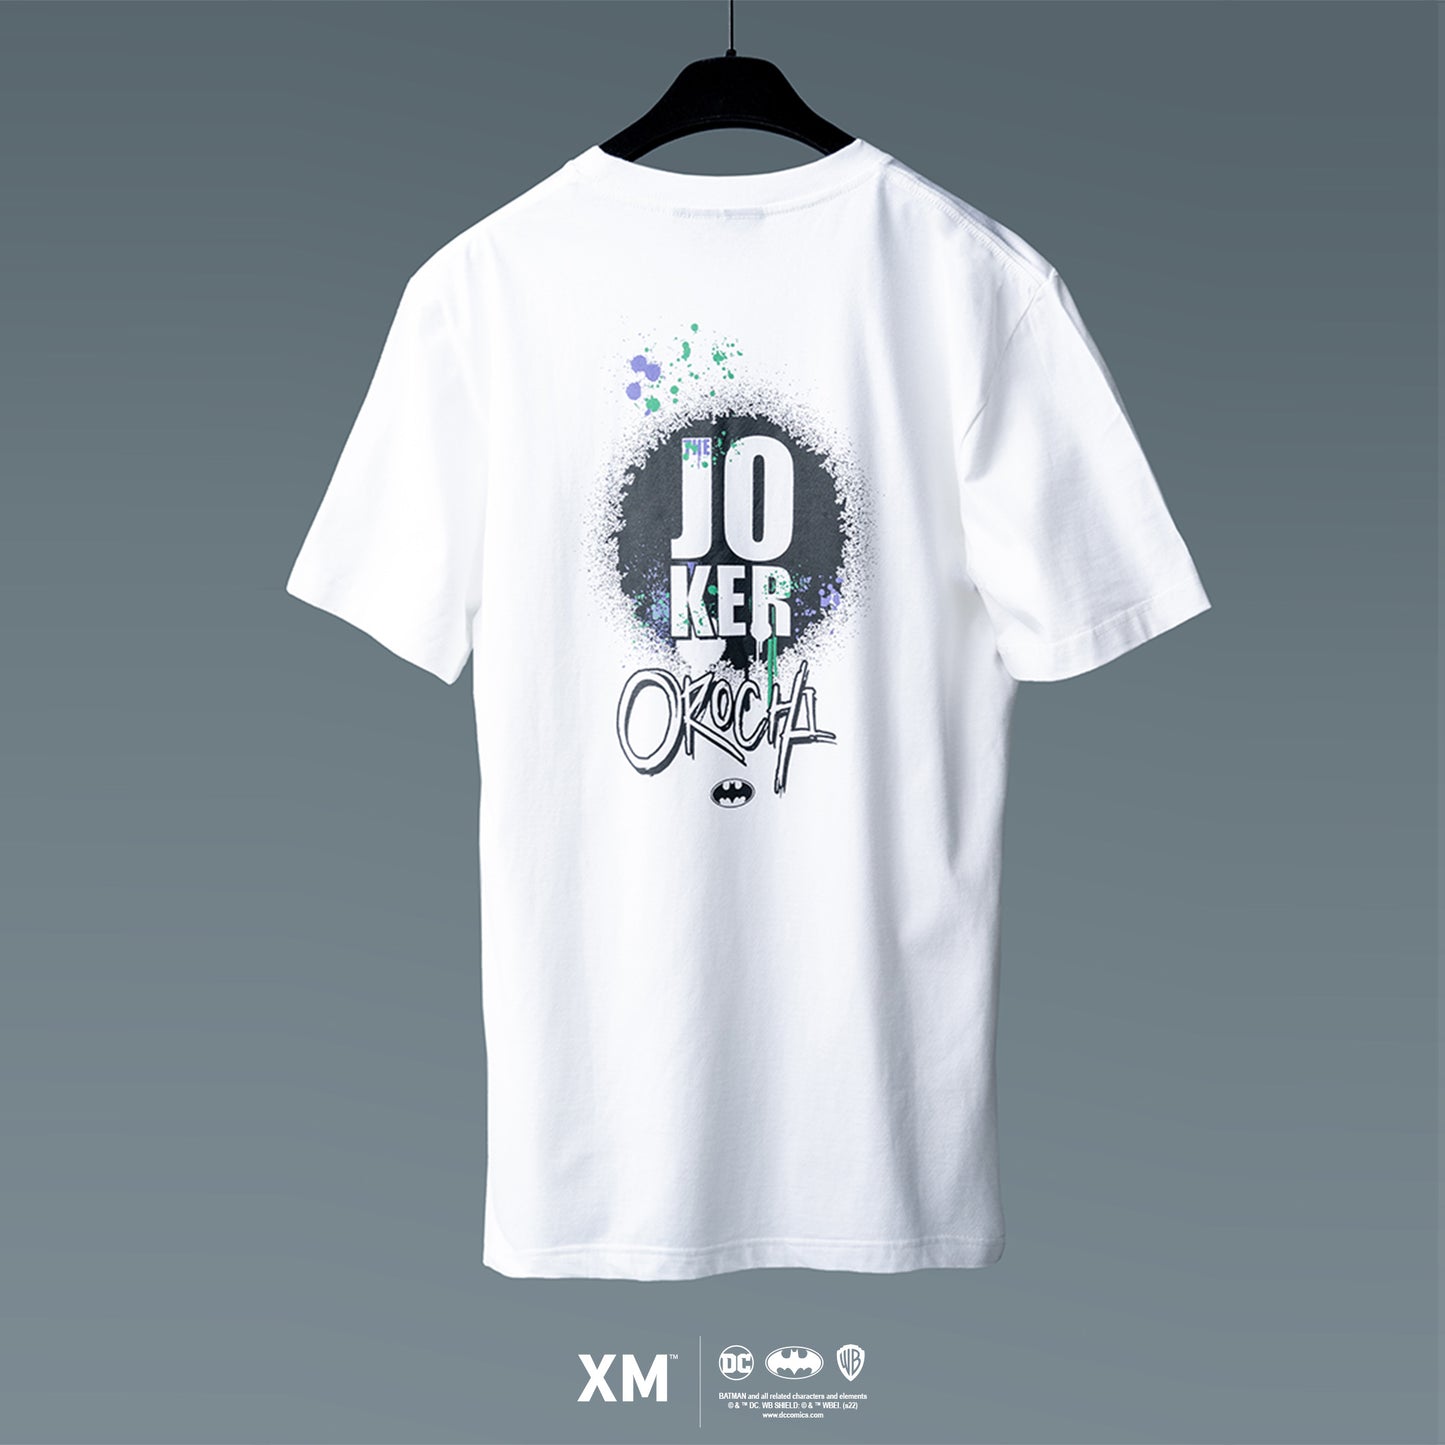 Batman Samurai Collection - Joker Orochi-Inspired Logo (White) T shirt